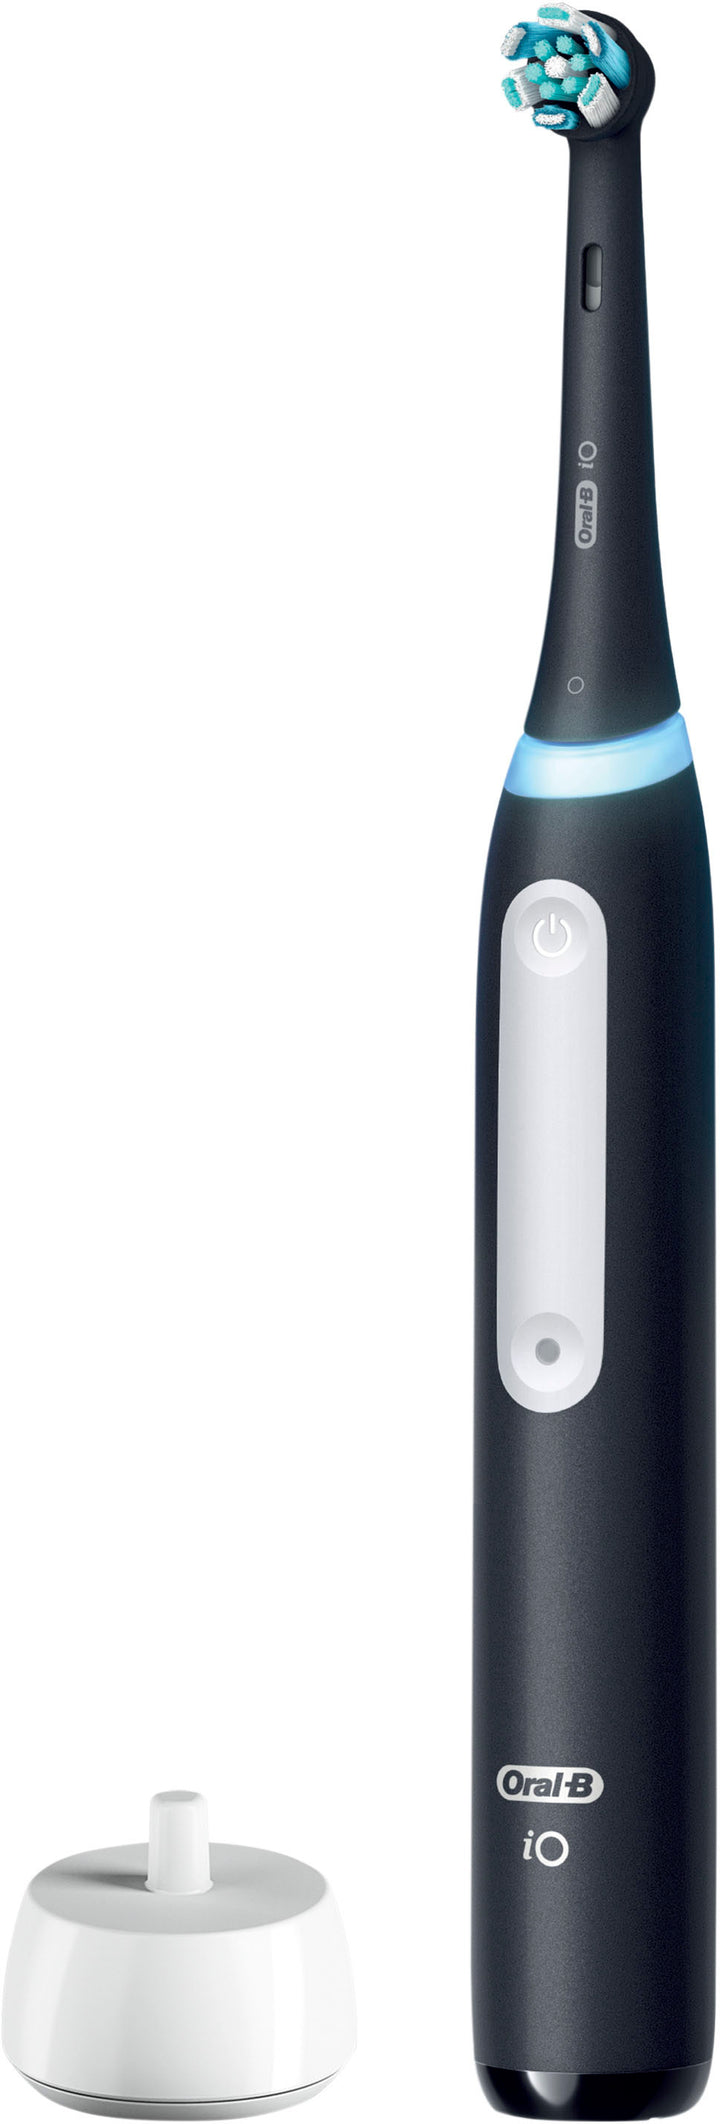 Oral-B - iO3 Electric Toothbrush (1) - Black_6